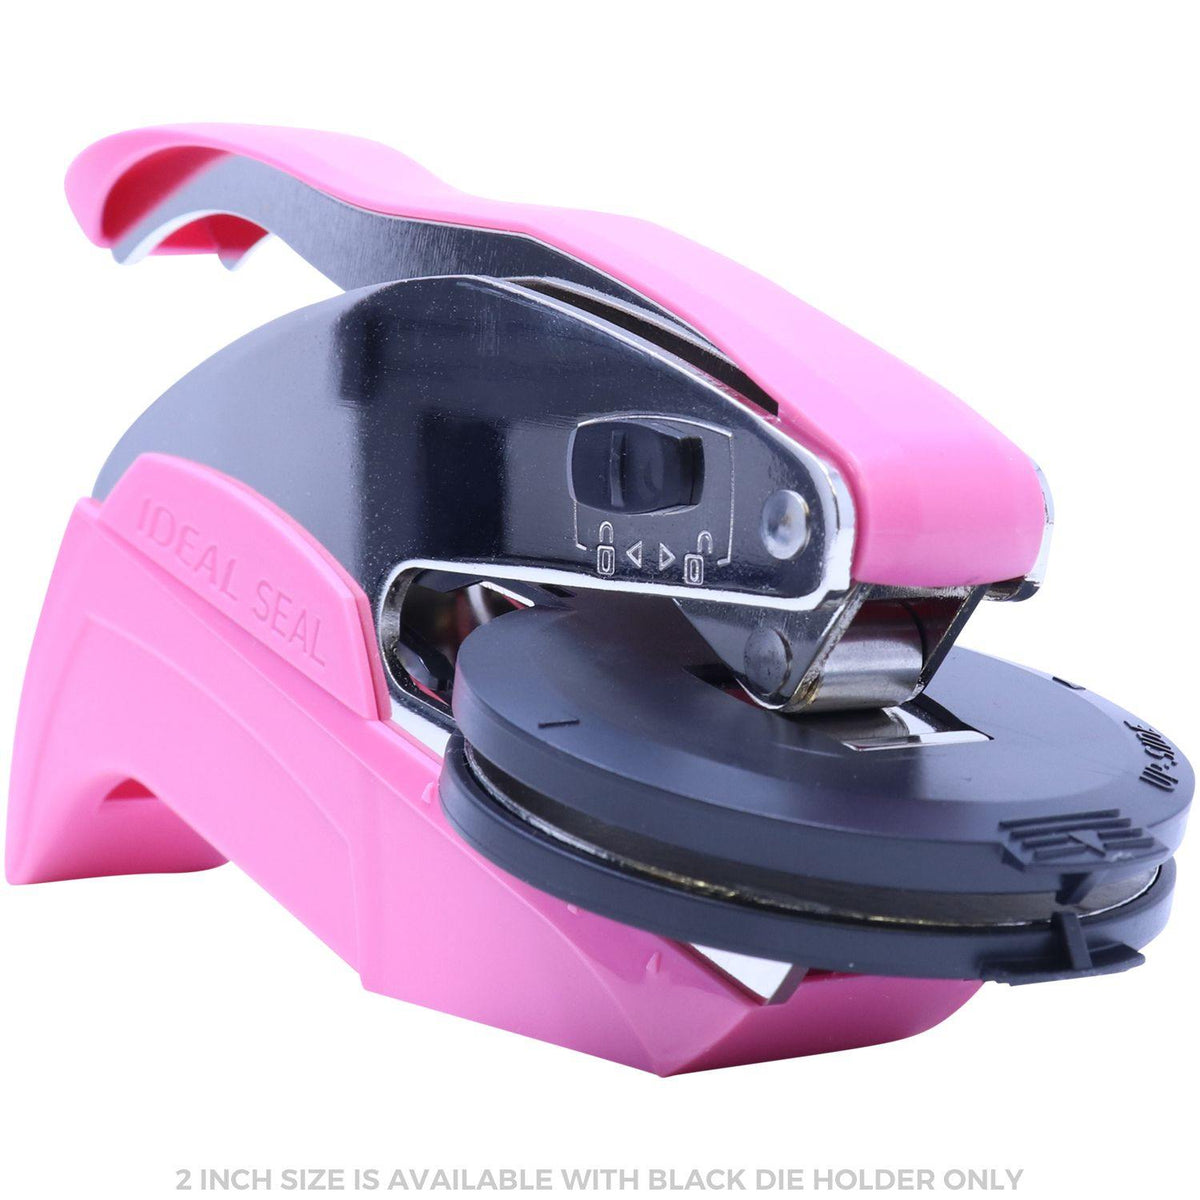 Professional Pink Hybrid Embosser - Engineer Seal Stamps - Embosser Type_Handheld, Embosser Type_Hybrid, Type of Use_Professional